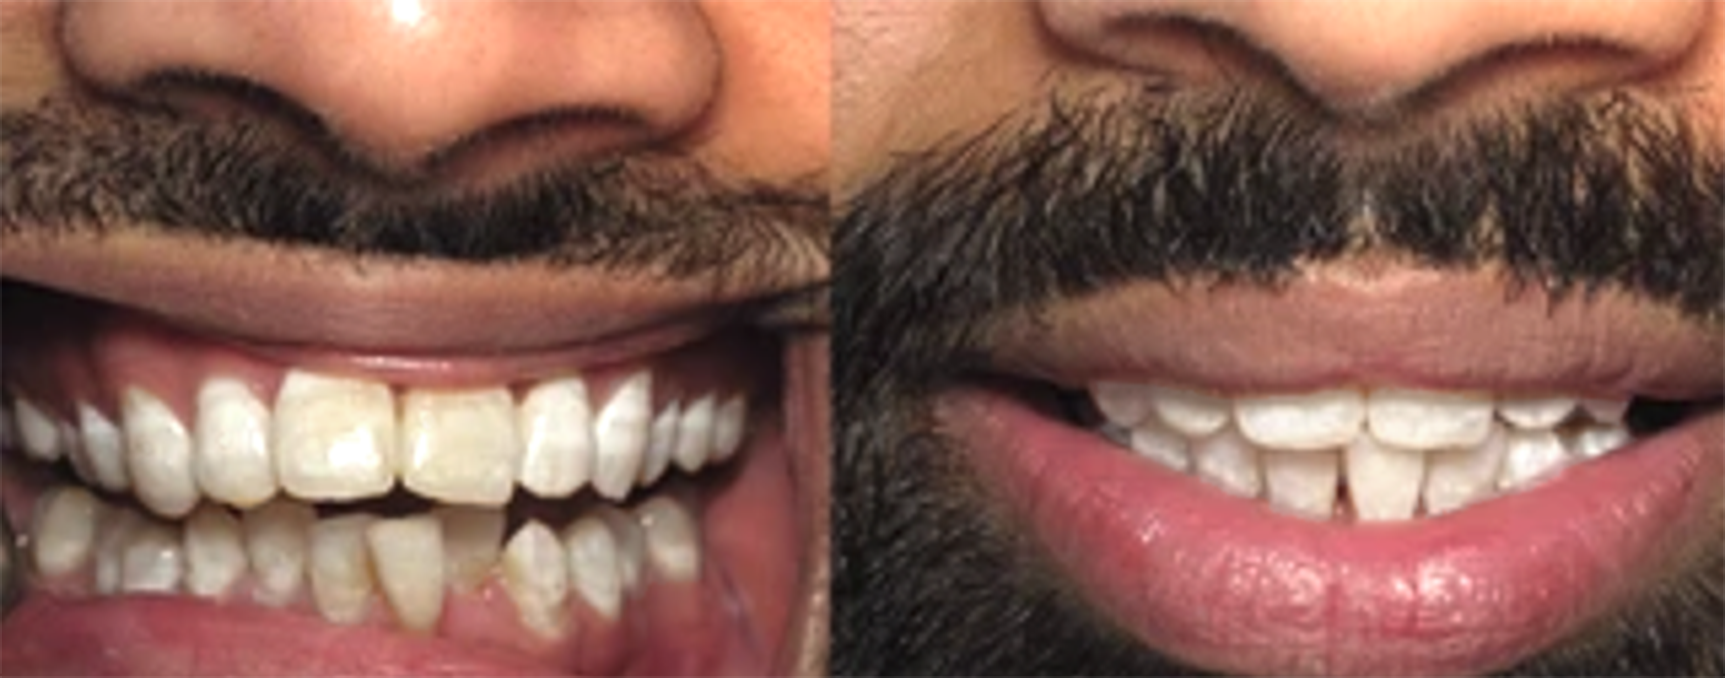 teeth misalignment treatment